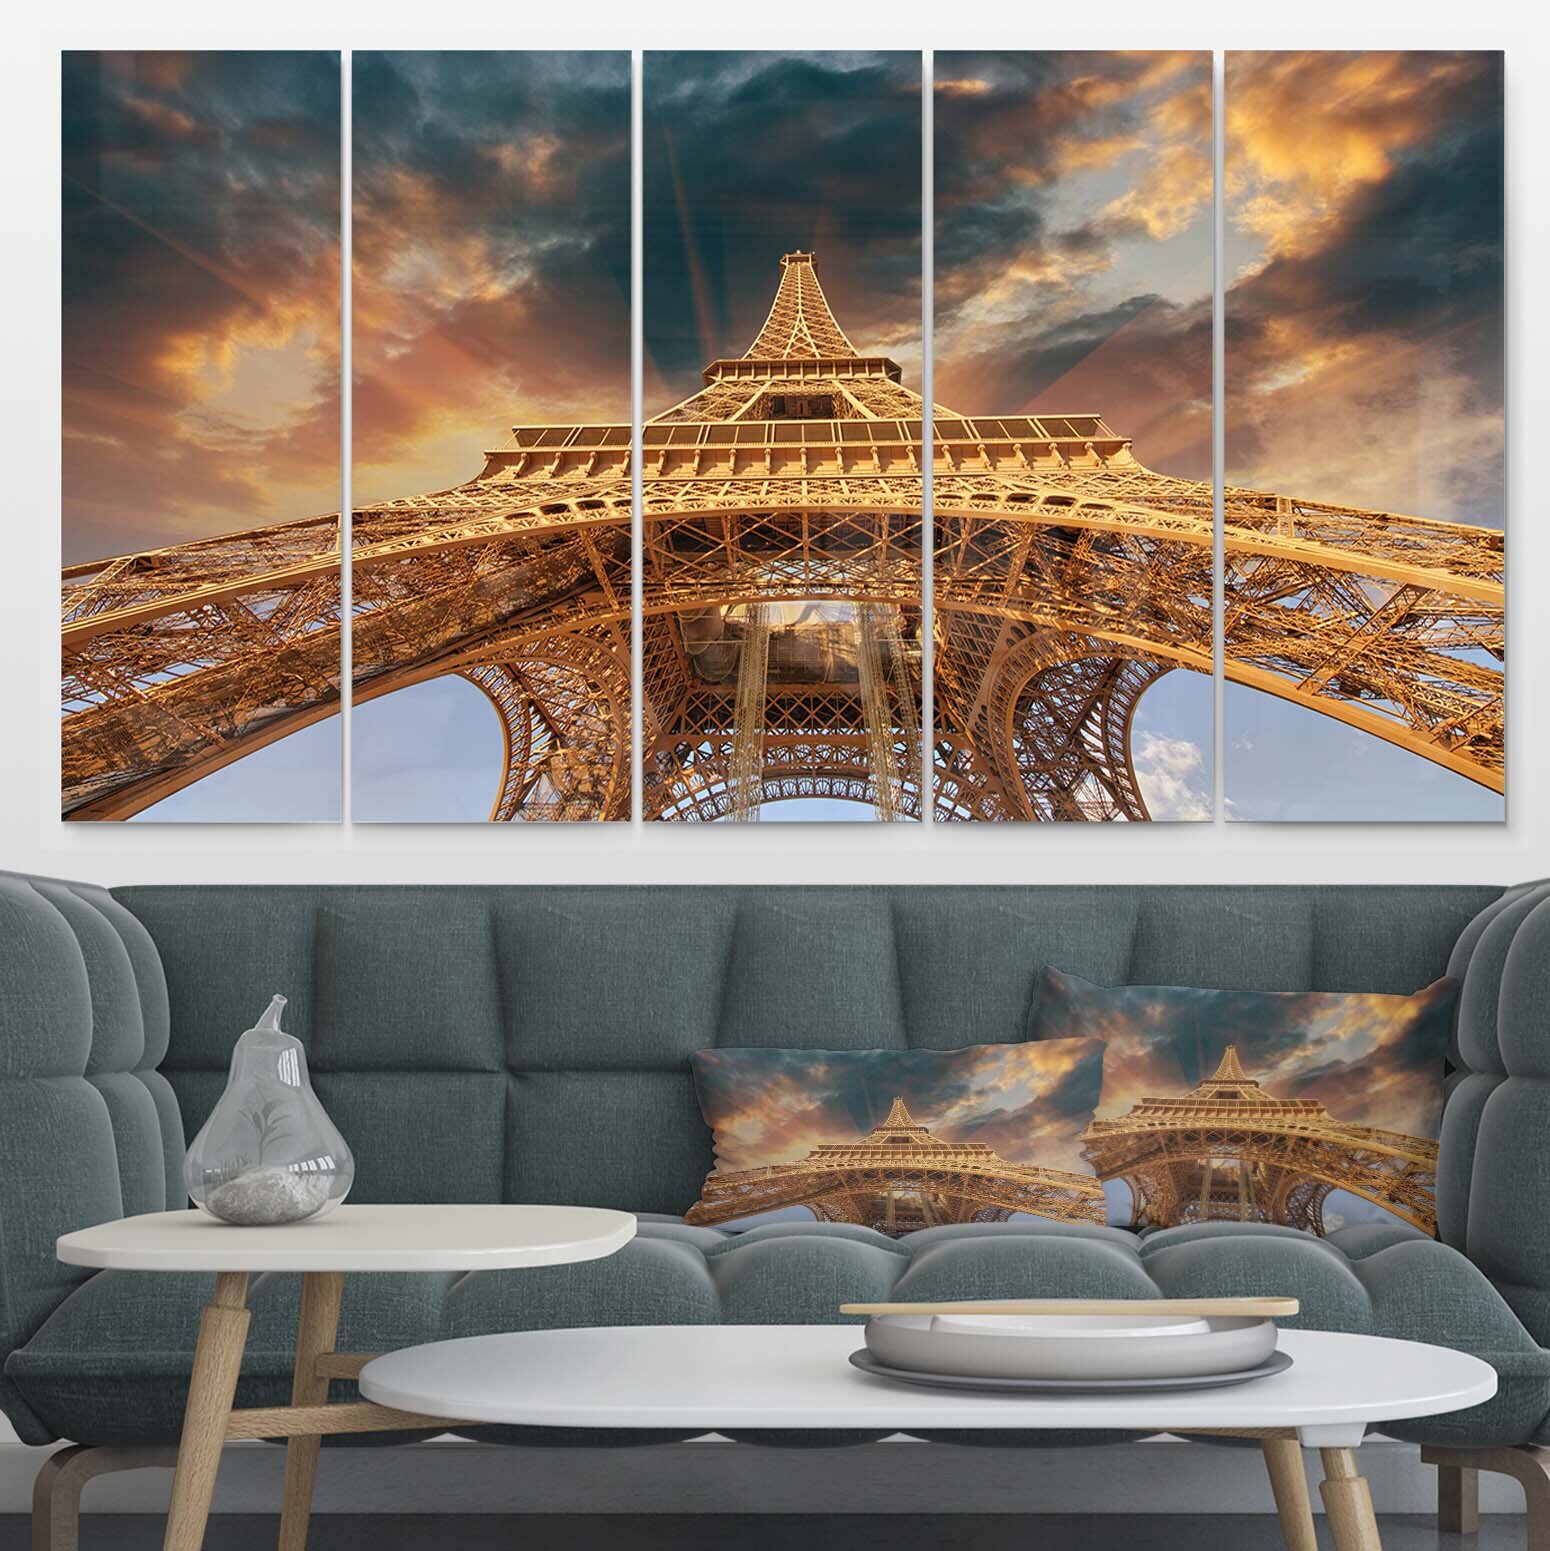 Bless international In | Paris On 5 Sunset Colors Paris Print Metal Wayfair Pieces Tower With Eiffel Paris